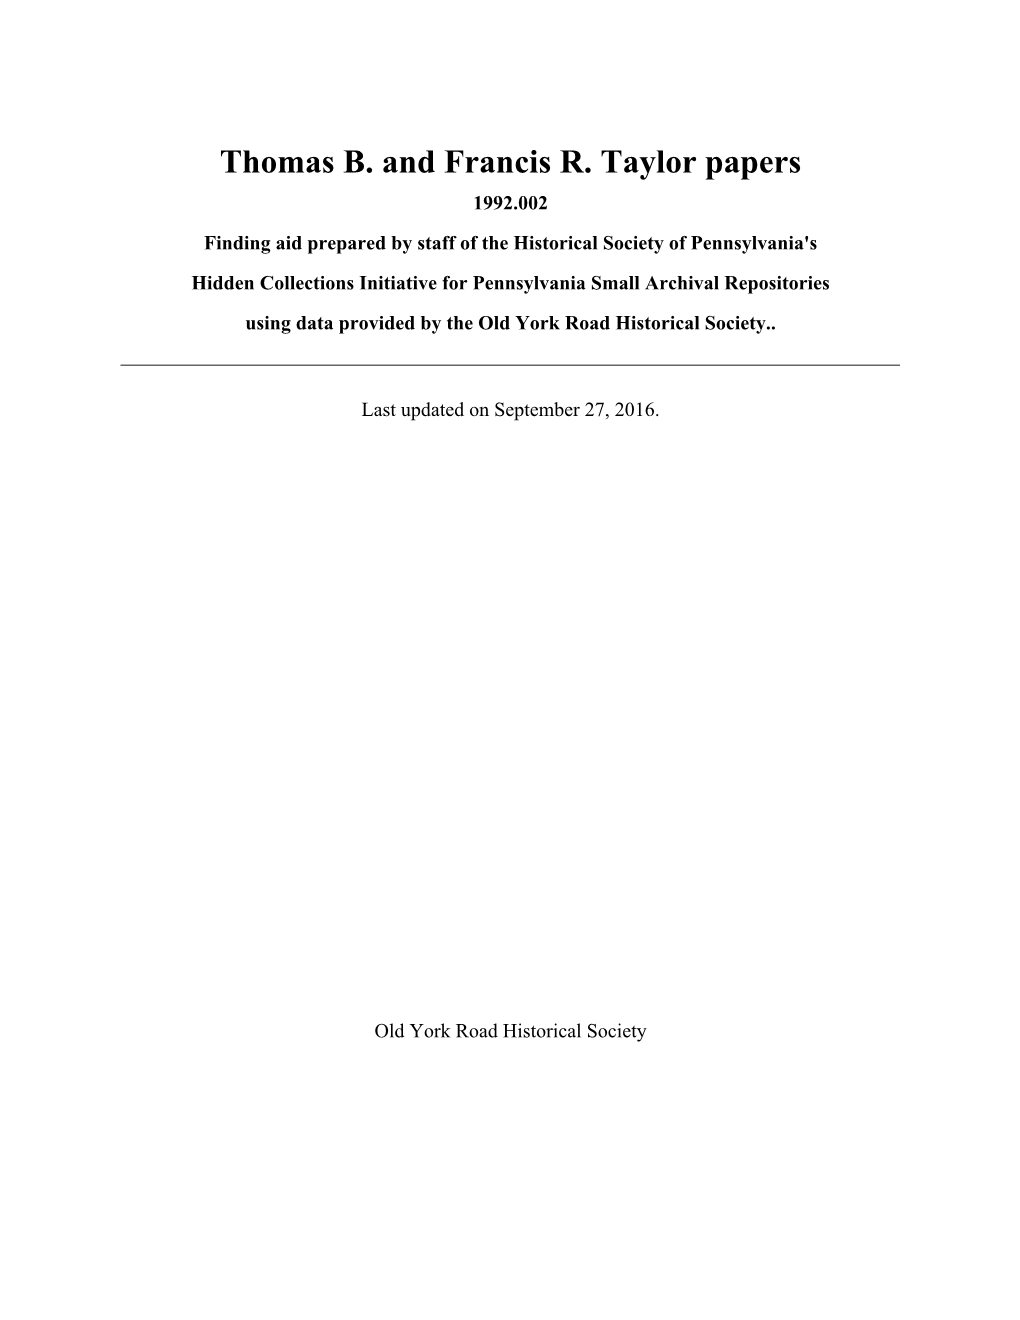 Thomas B. and Francis R. Taylor Papers